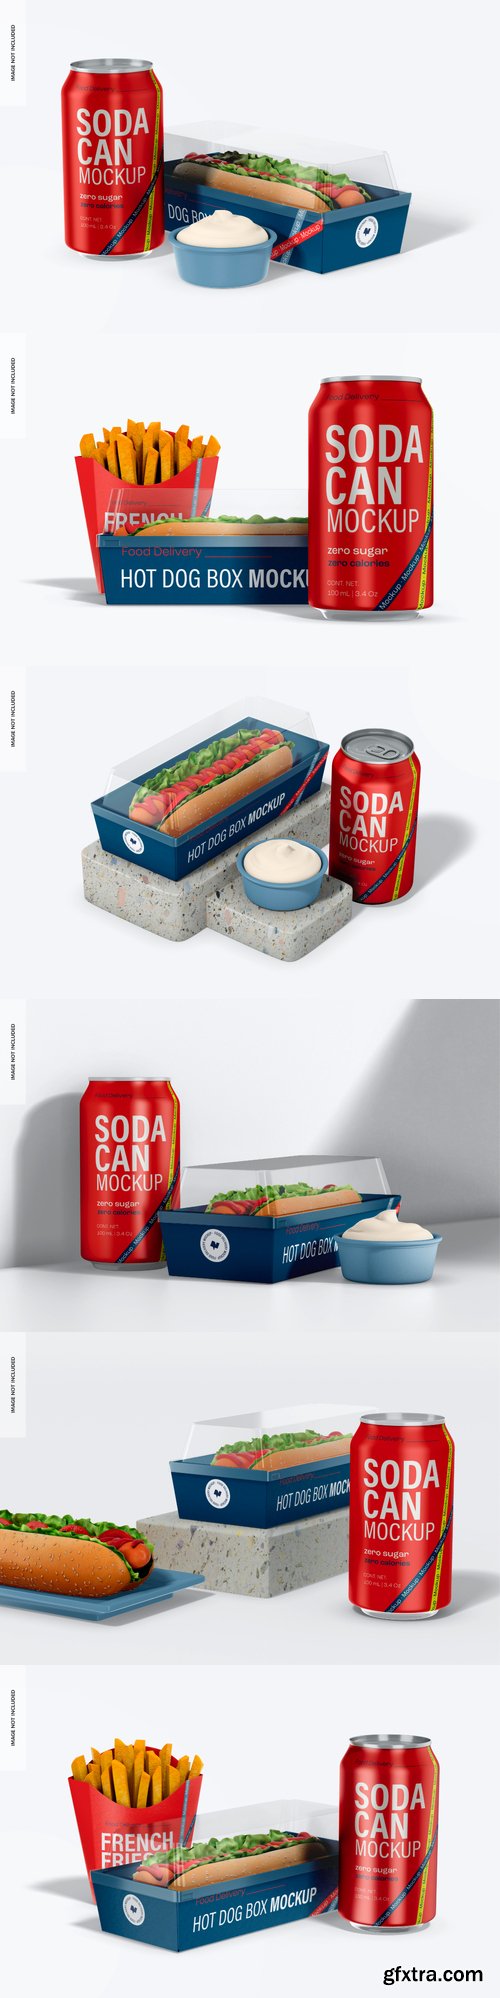 Hot dog box with soda can mockup